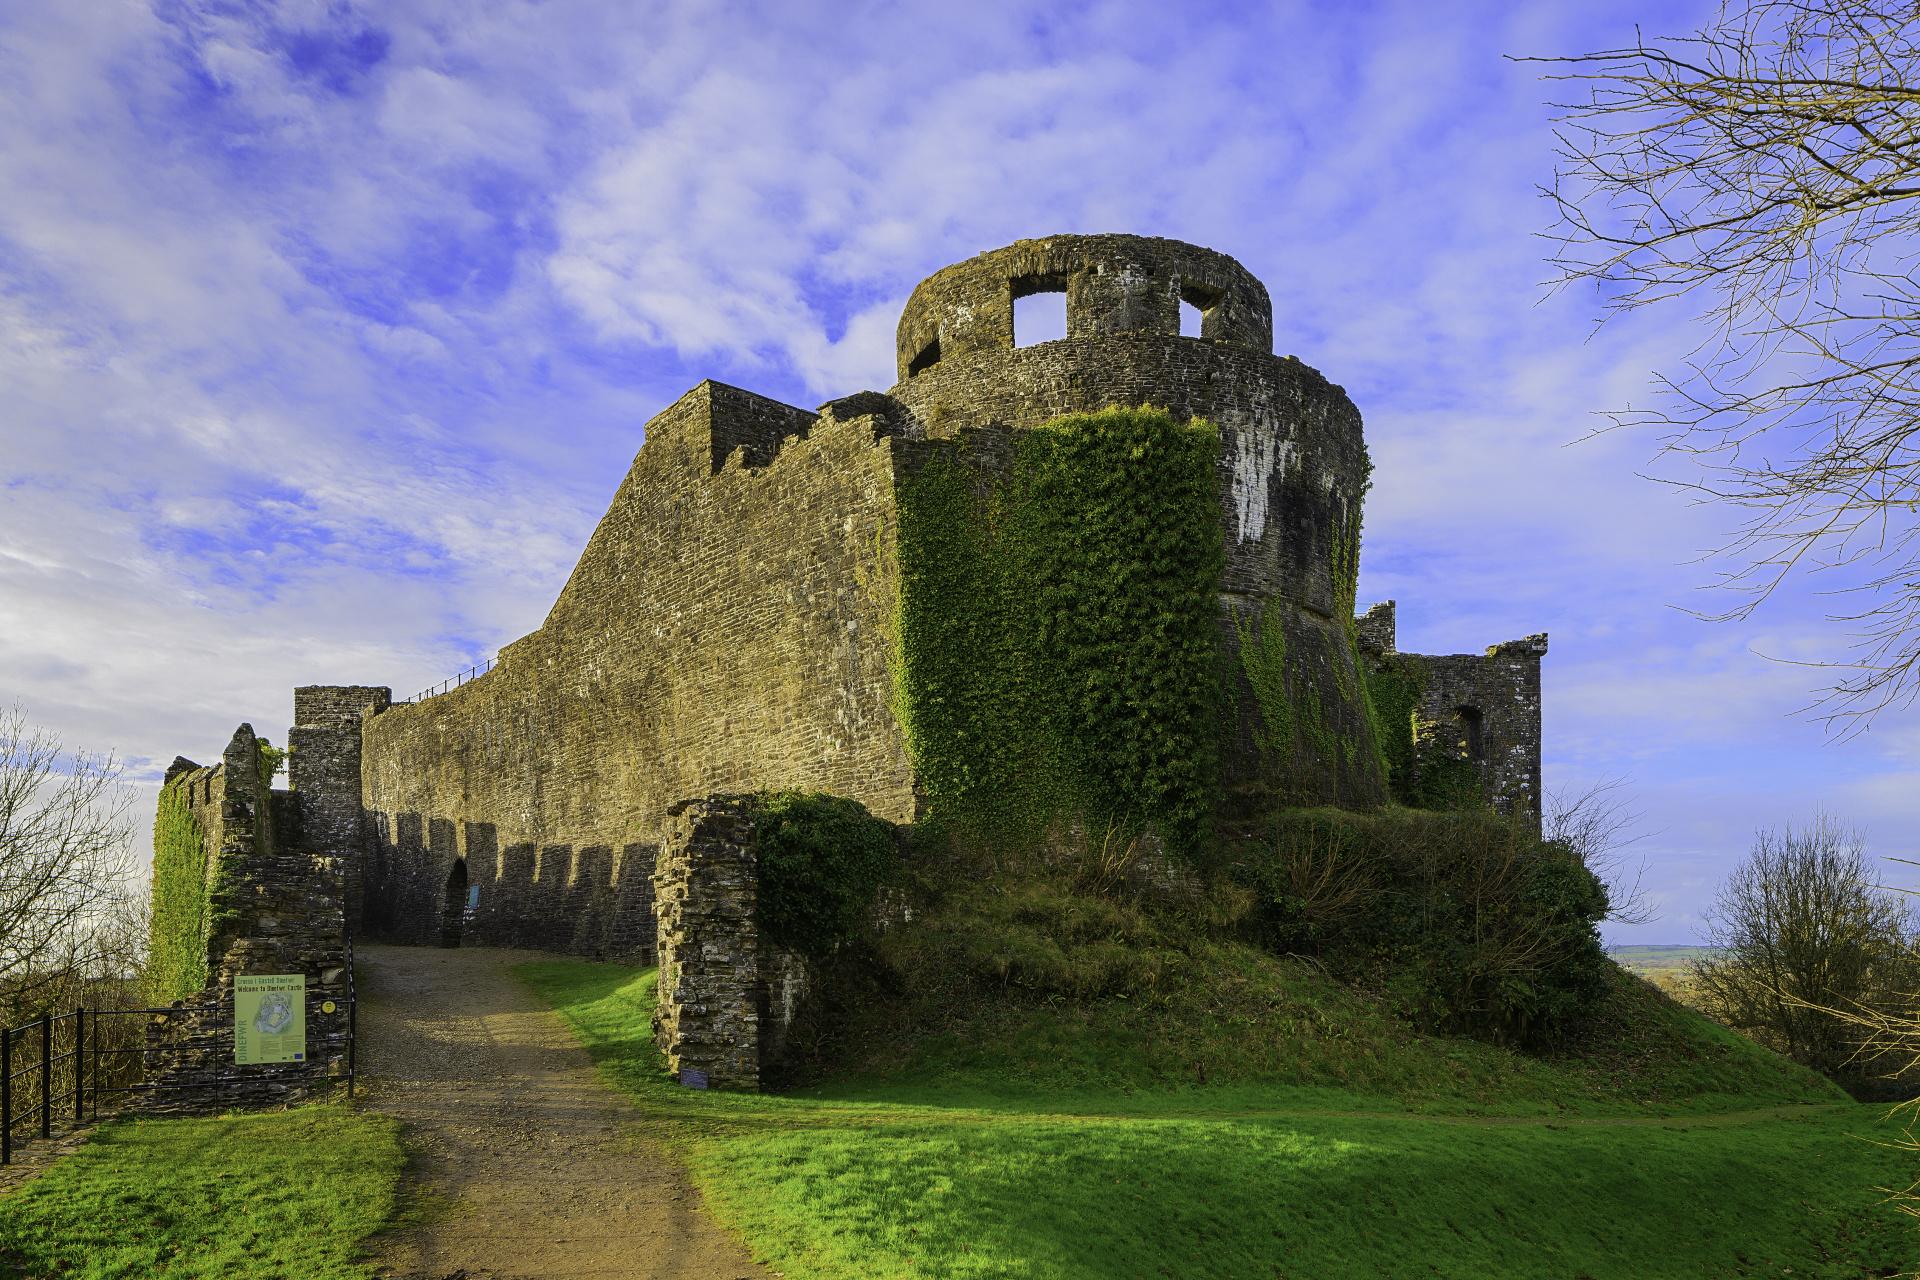 Castell Dinefwr/Dinefwr Castle